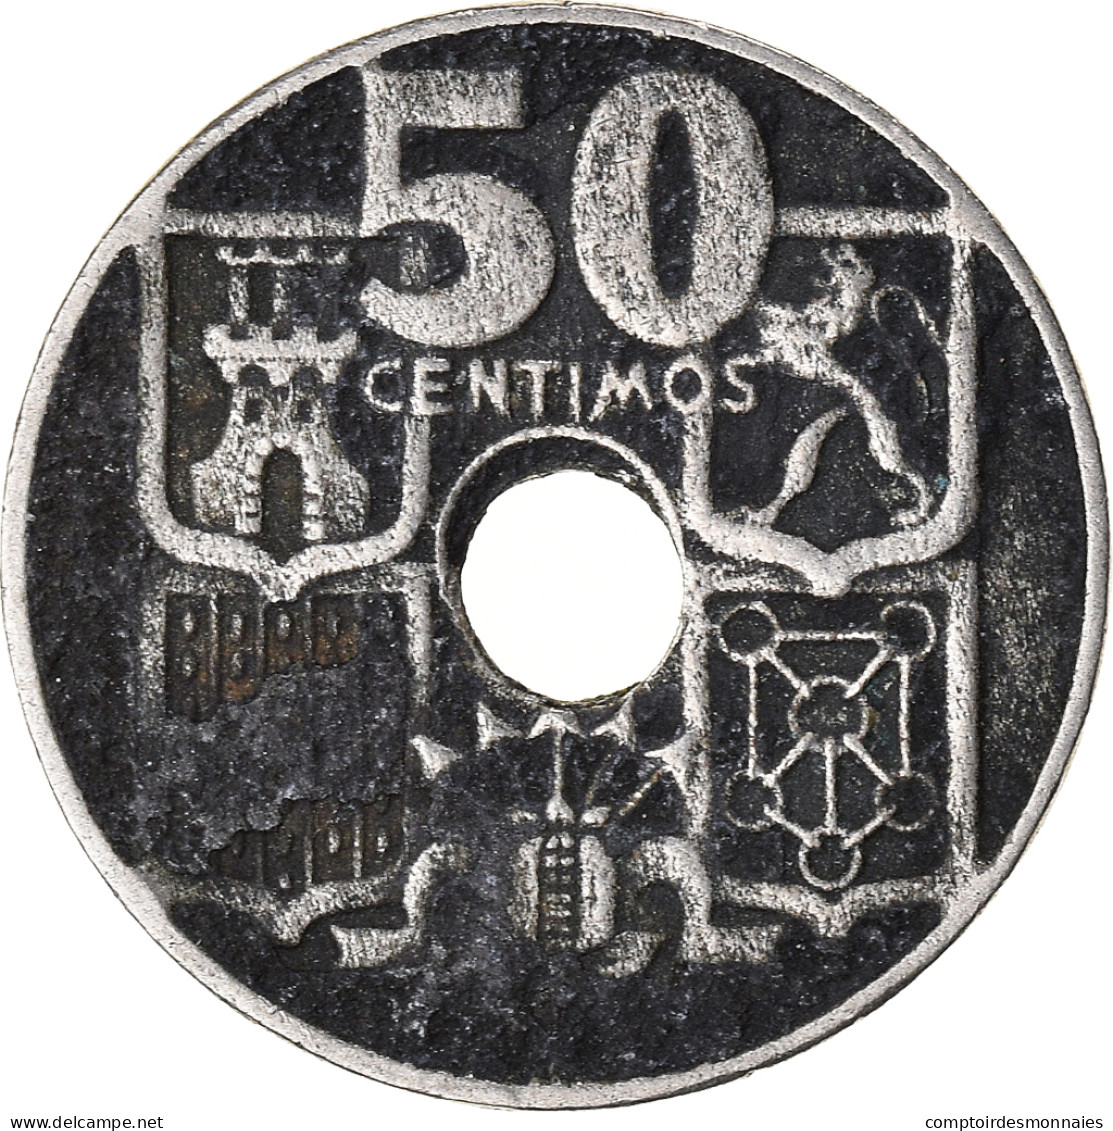 Monnaie, Espagne, 50 Centimos, 1949 - 50 Centimos